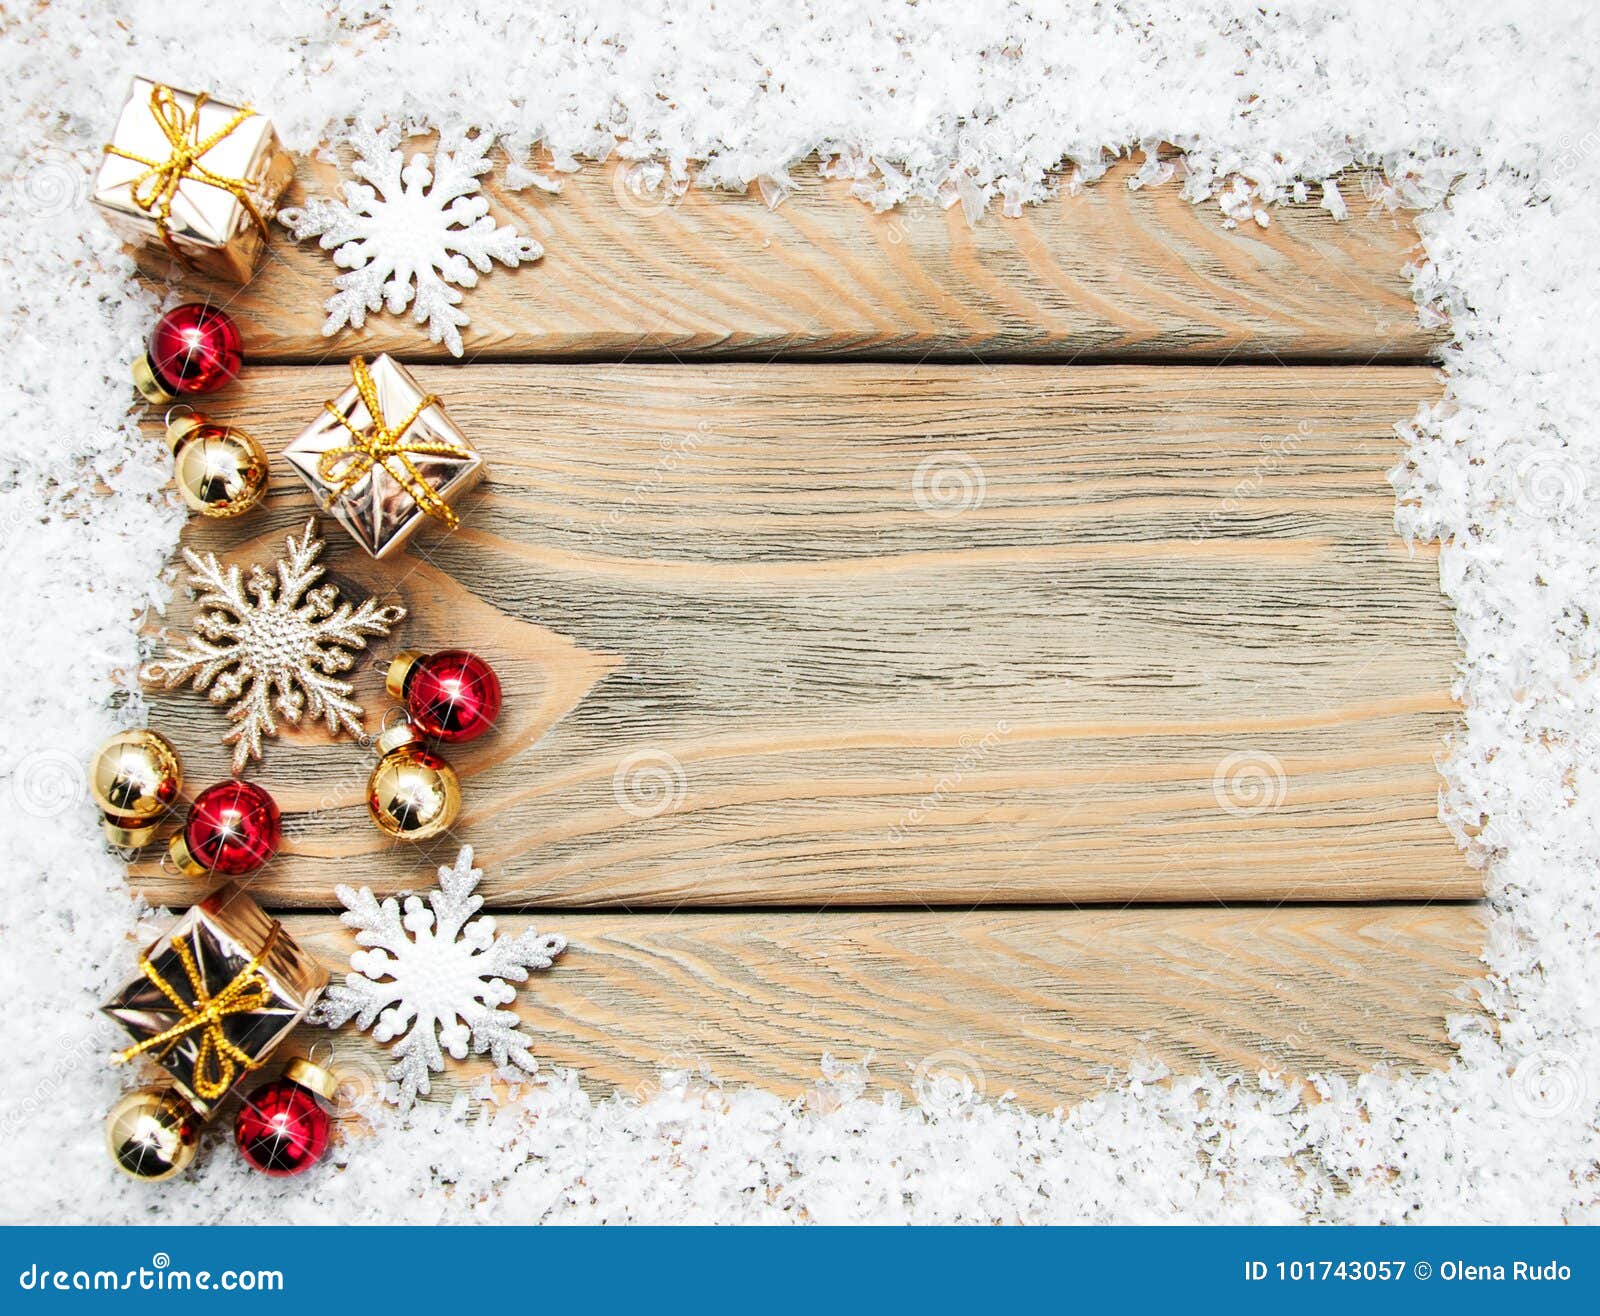 Christmas Holiday Background Stock Image - Image of copy, gift: 101743057